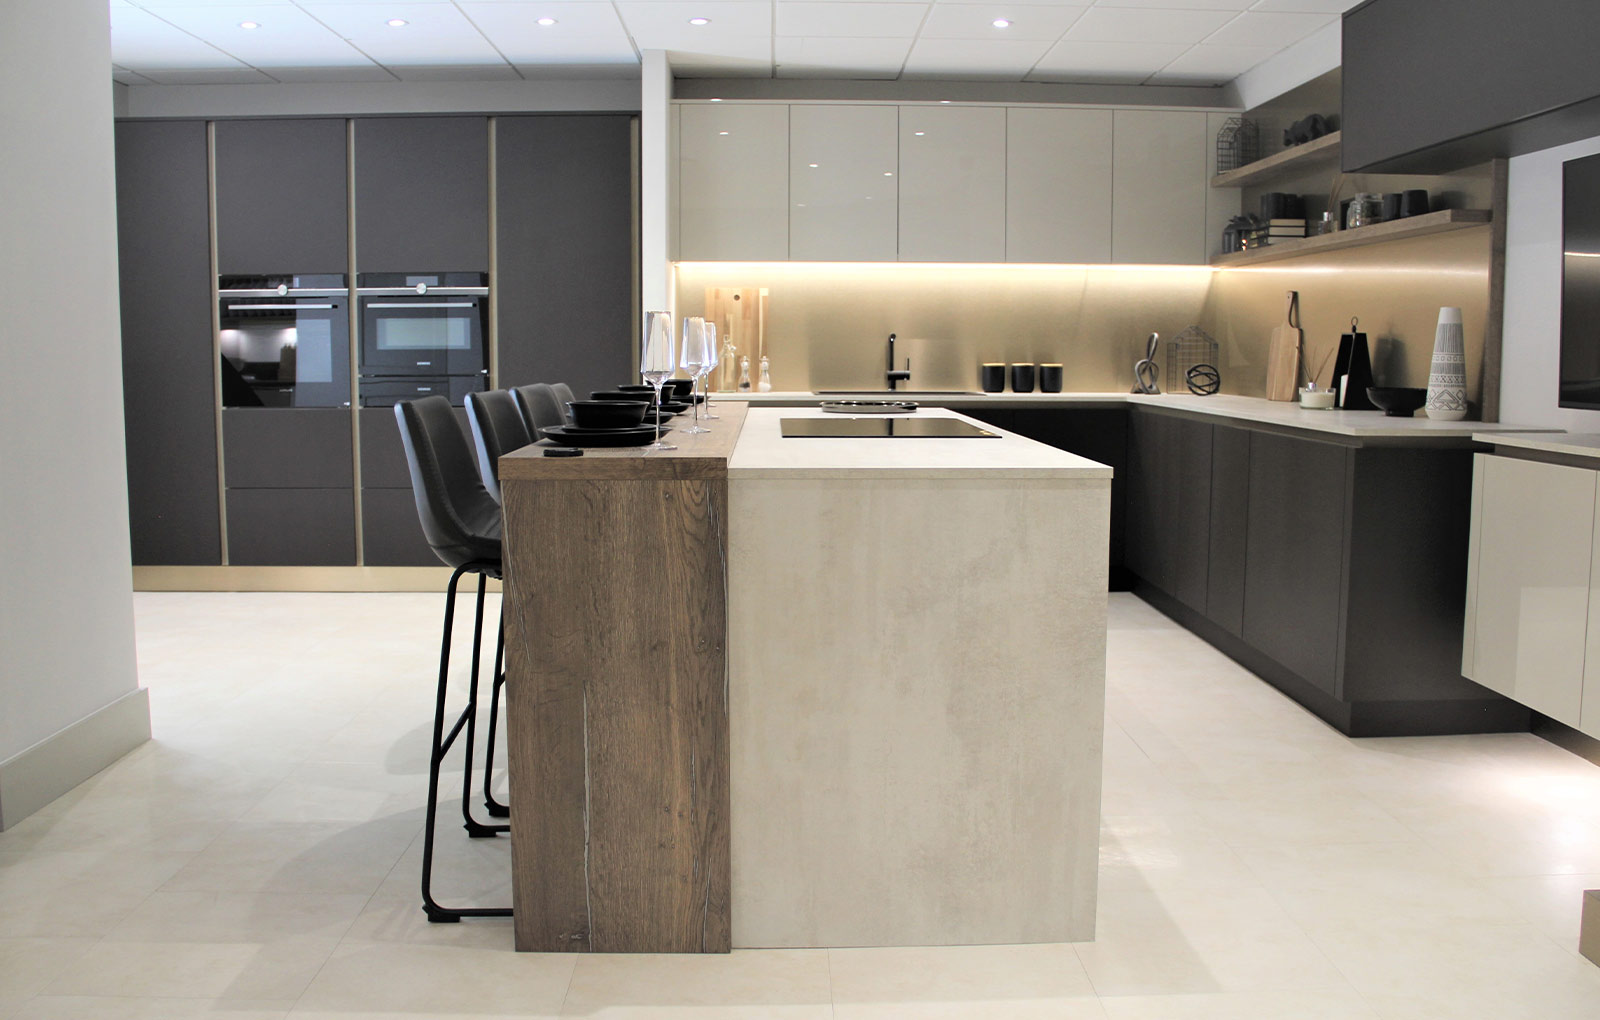 Modern luxury kitchen with dark kitchen cabinets and metalic accents